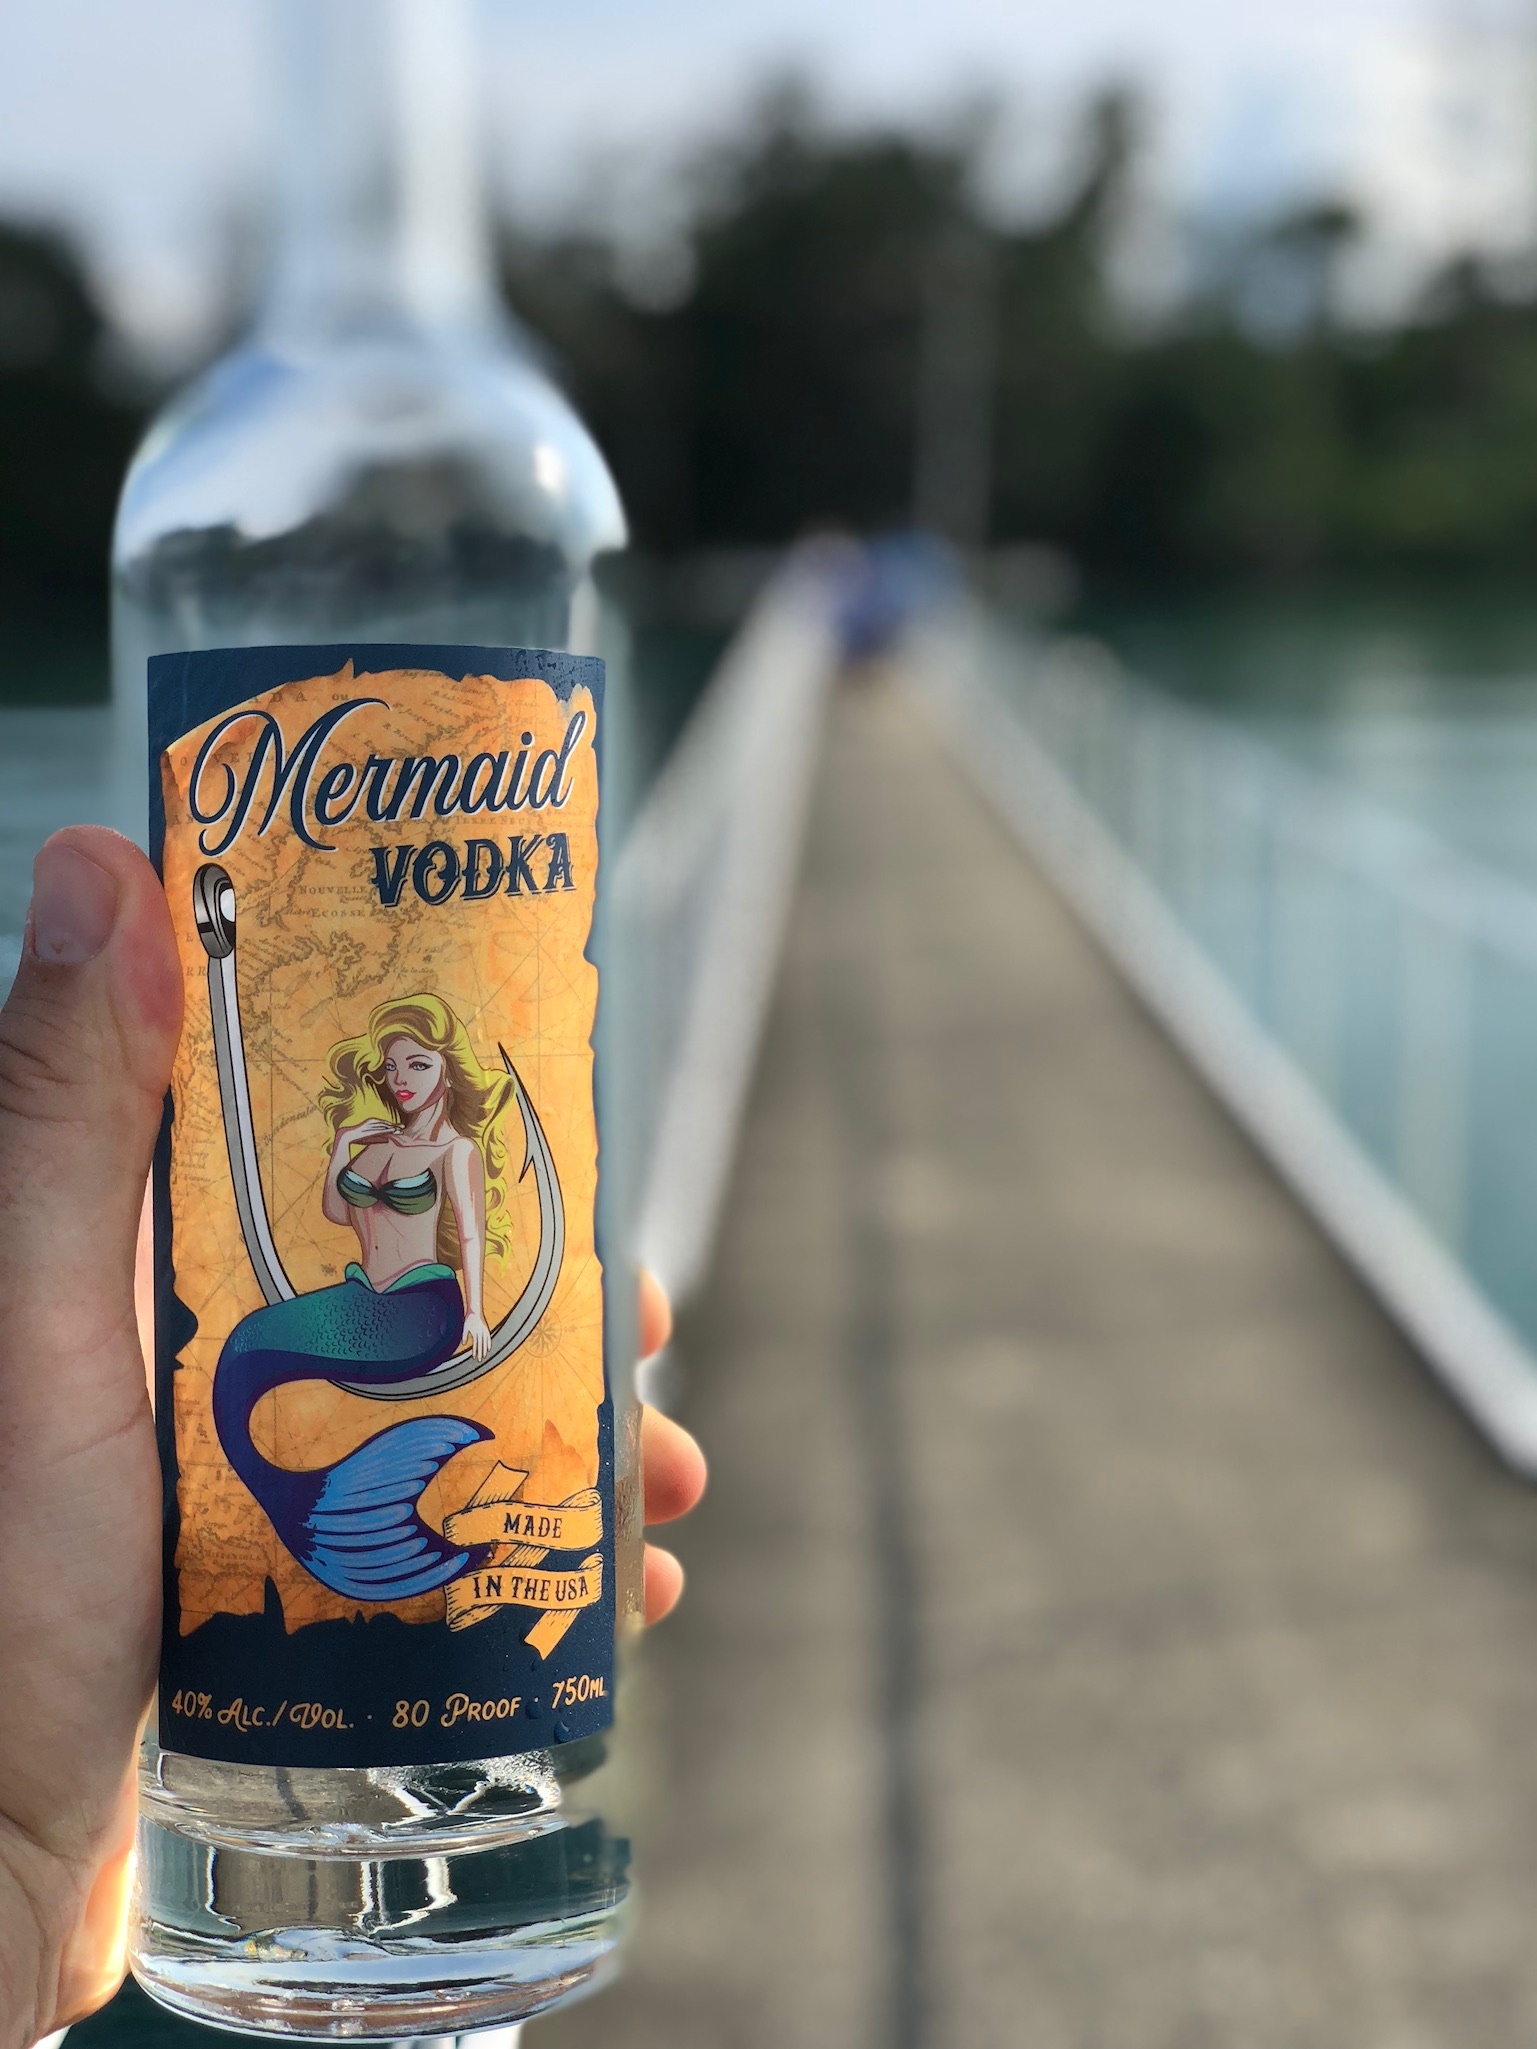 Bottle of Mermaid Vodka